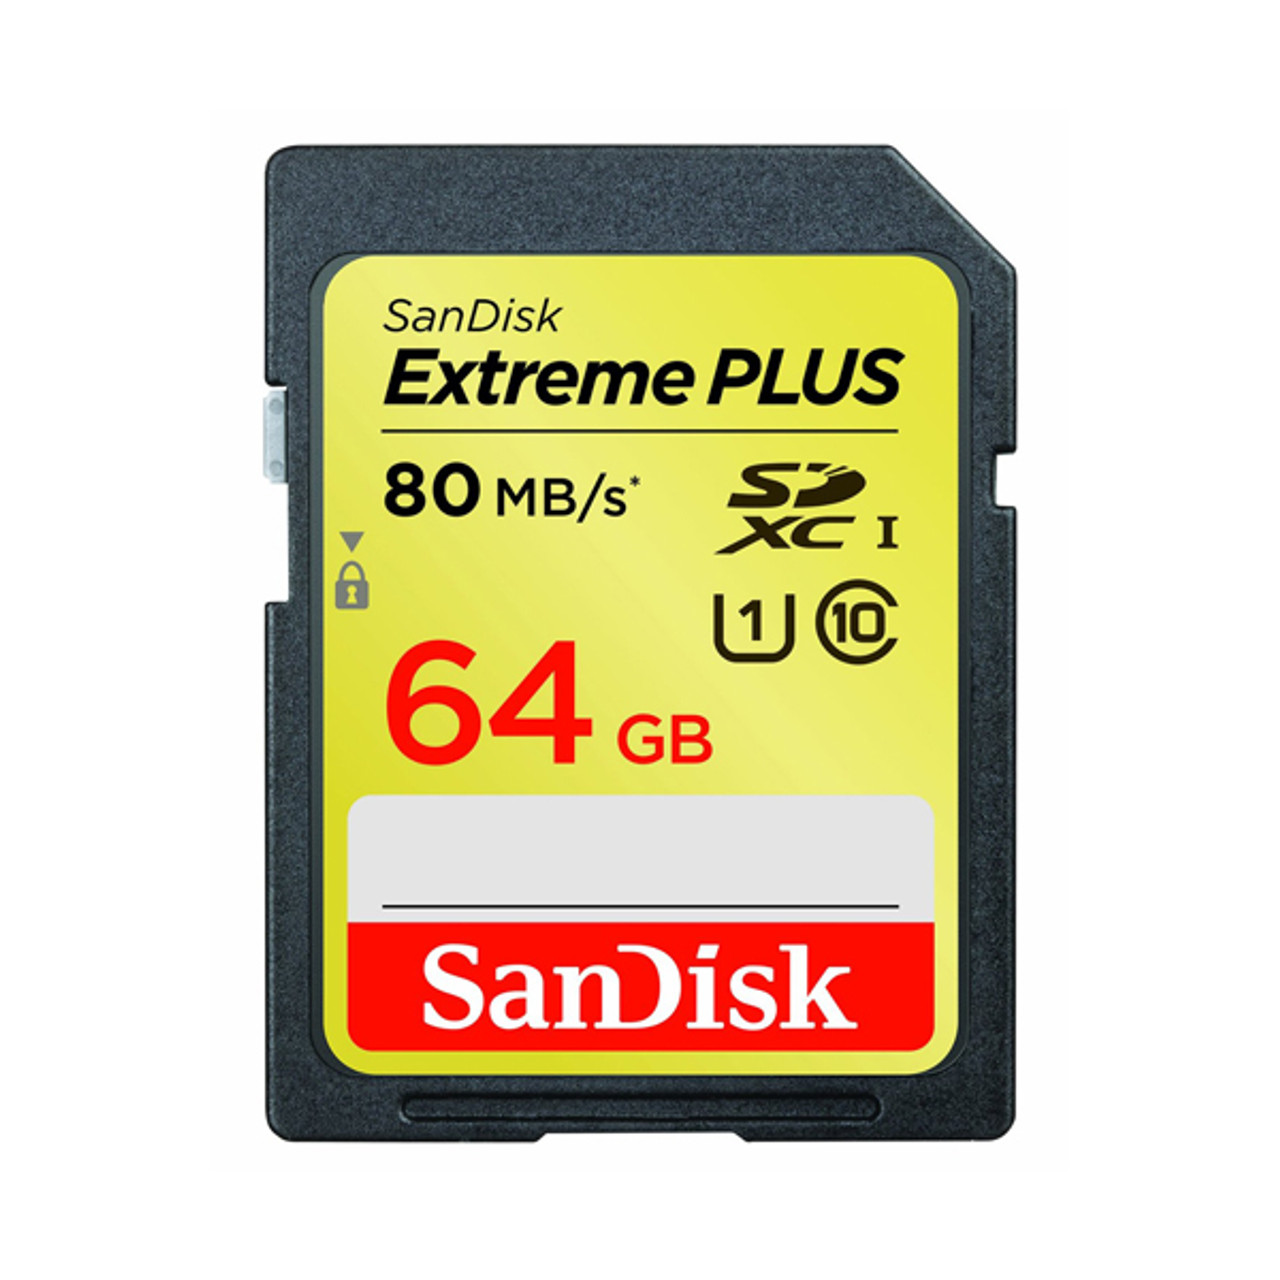 Sandisk Extreme Plus 64GB Class 10 UHS-I SDXC Card